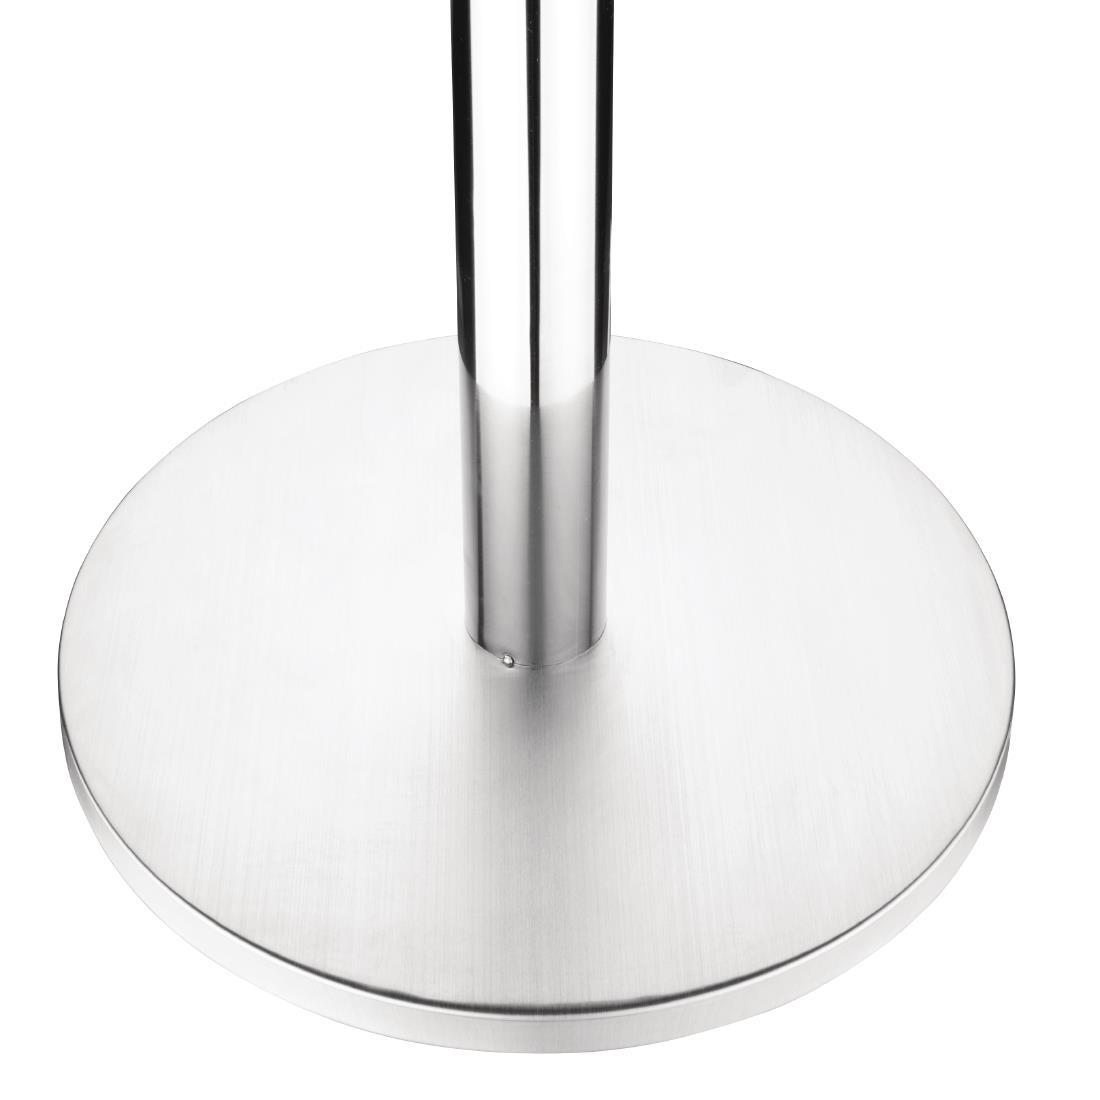 Bolero Stainless Steel Round Table Base - GK992  - 2